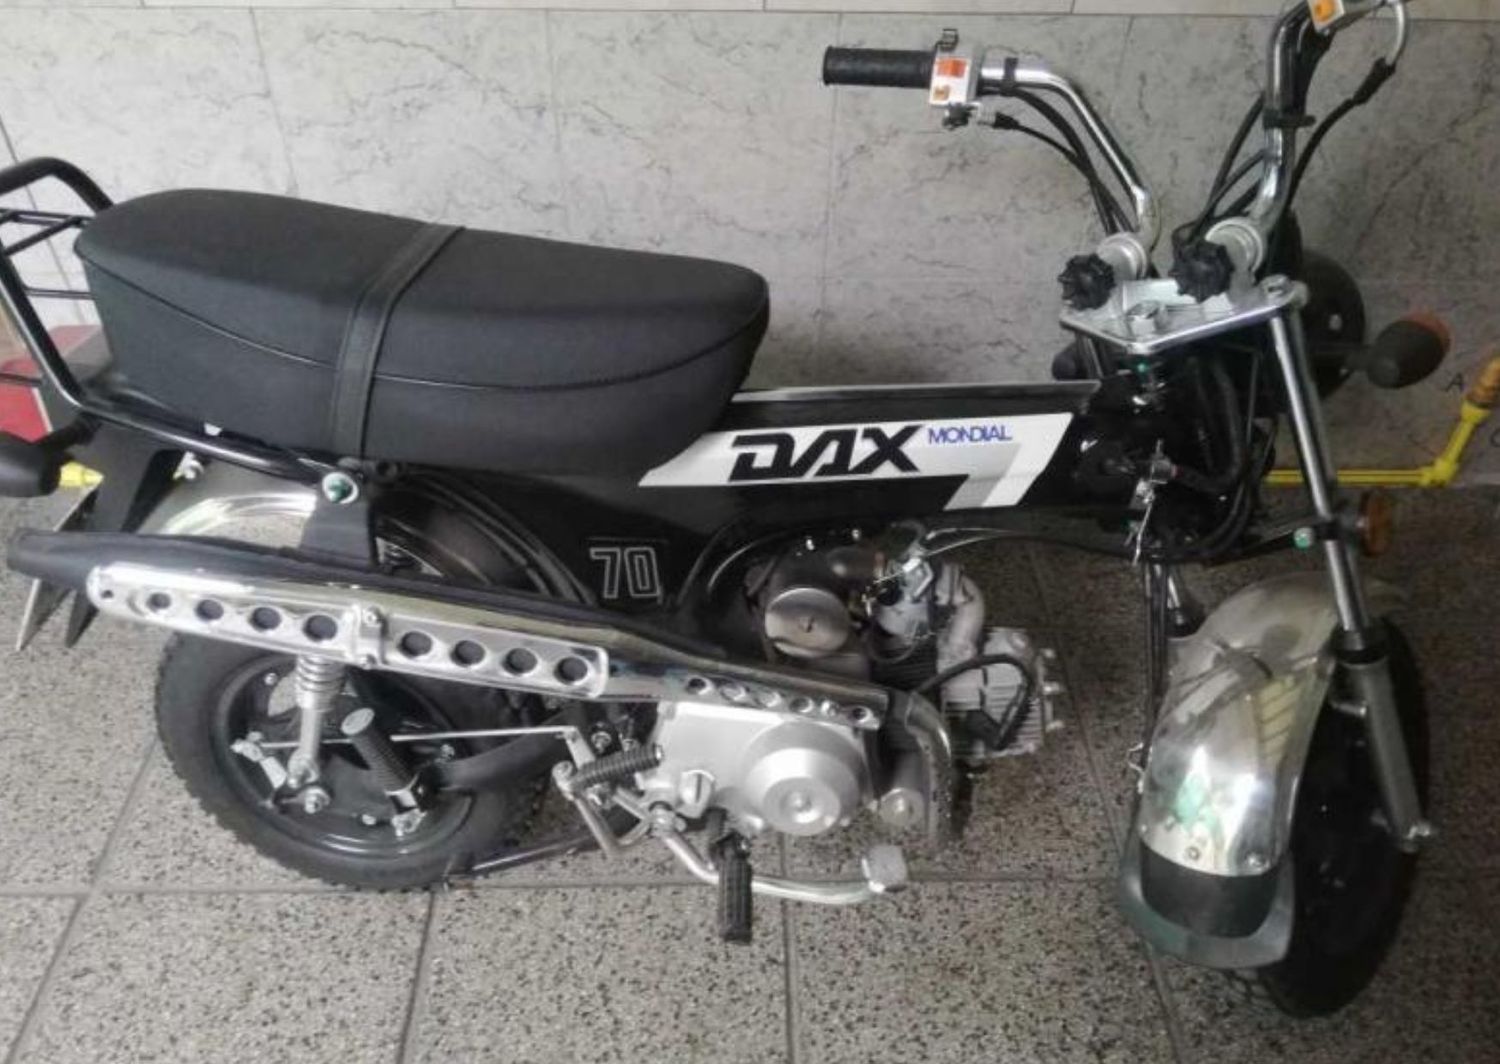 La moto robada es similar a la de la foto. Imagen ilustrativa.